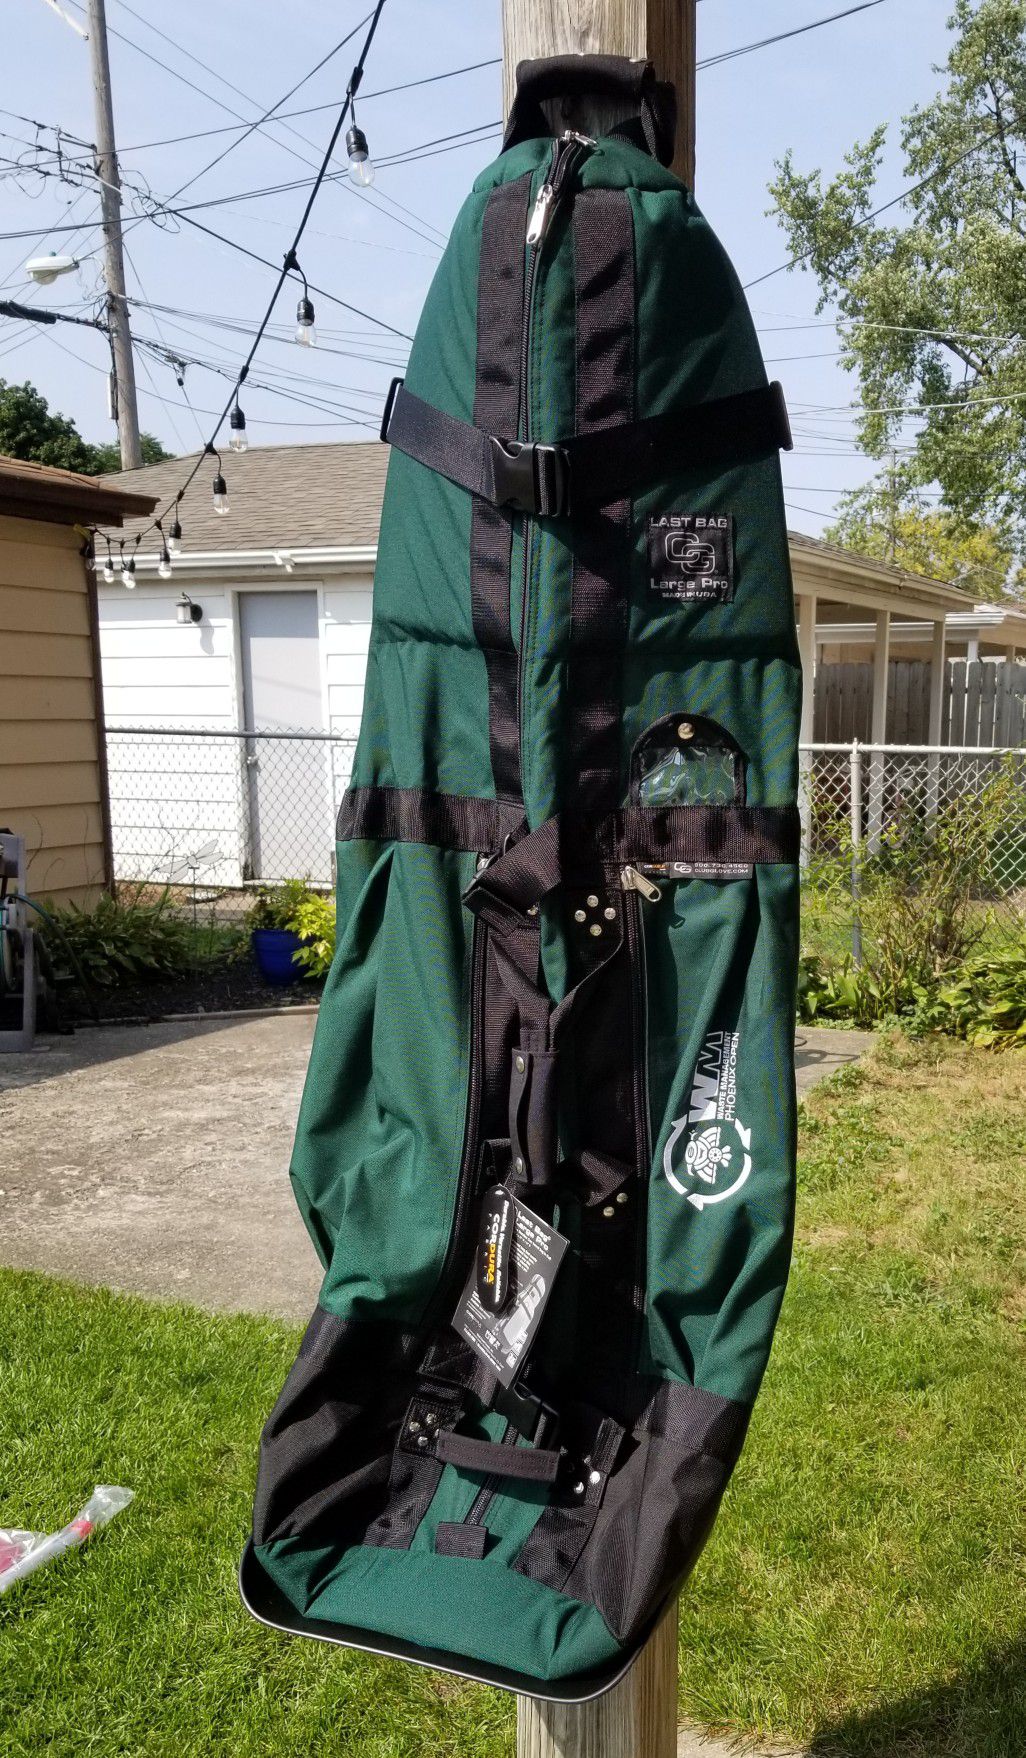 Club Glove Last Bag Large Pro Golf Travel Bag Never Used